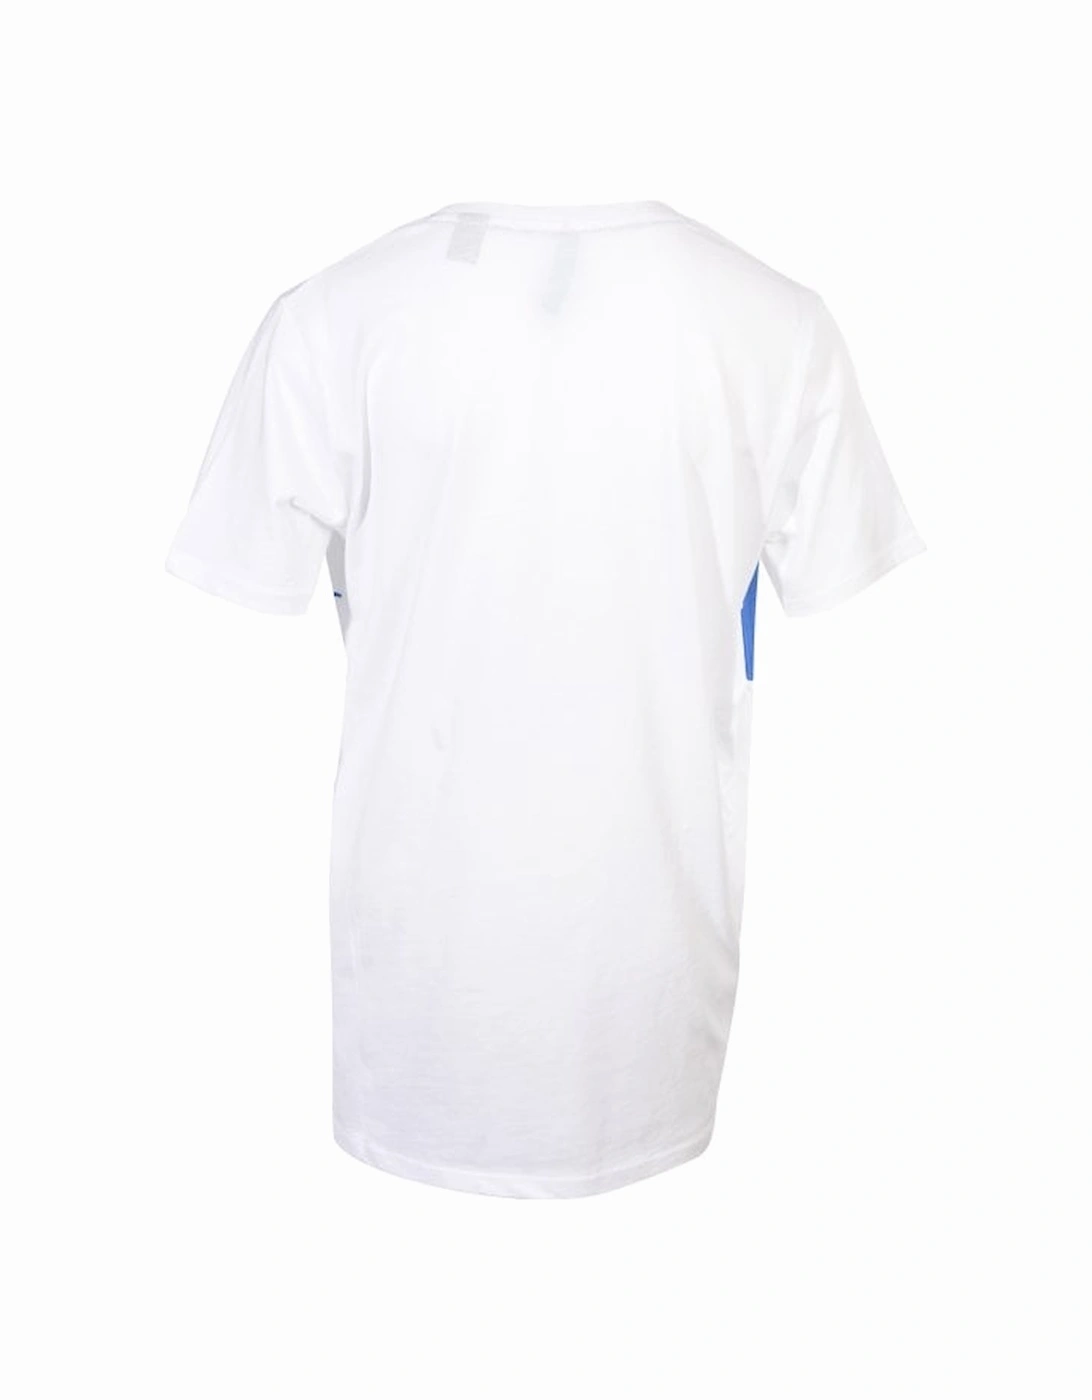 Boys Zoom Wave T-Shirt, Powder White